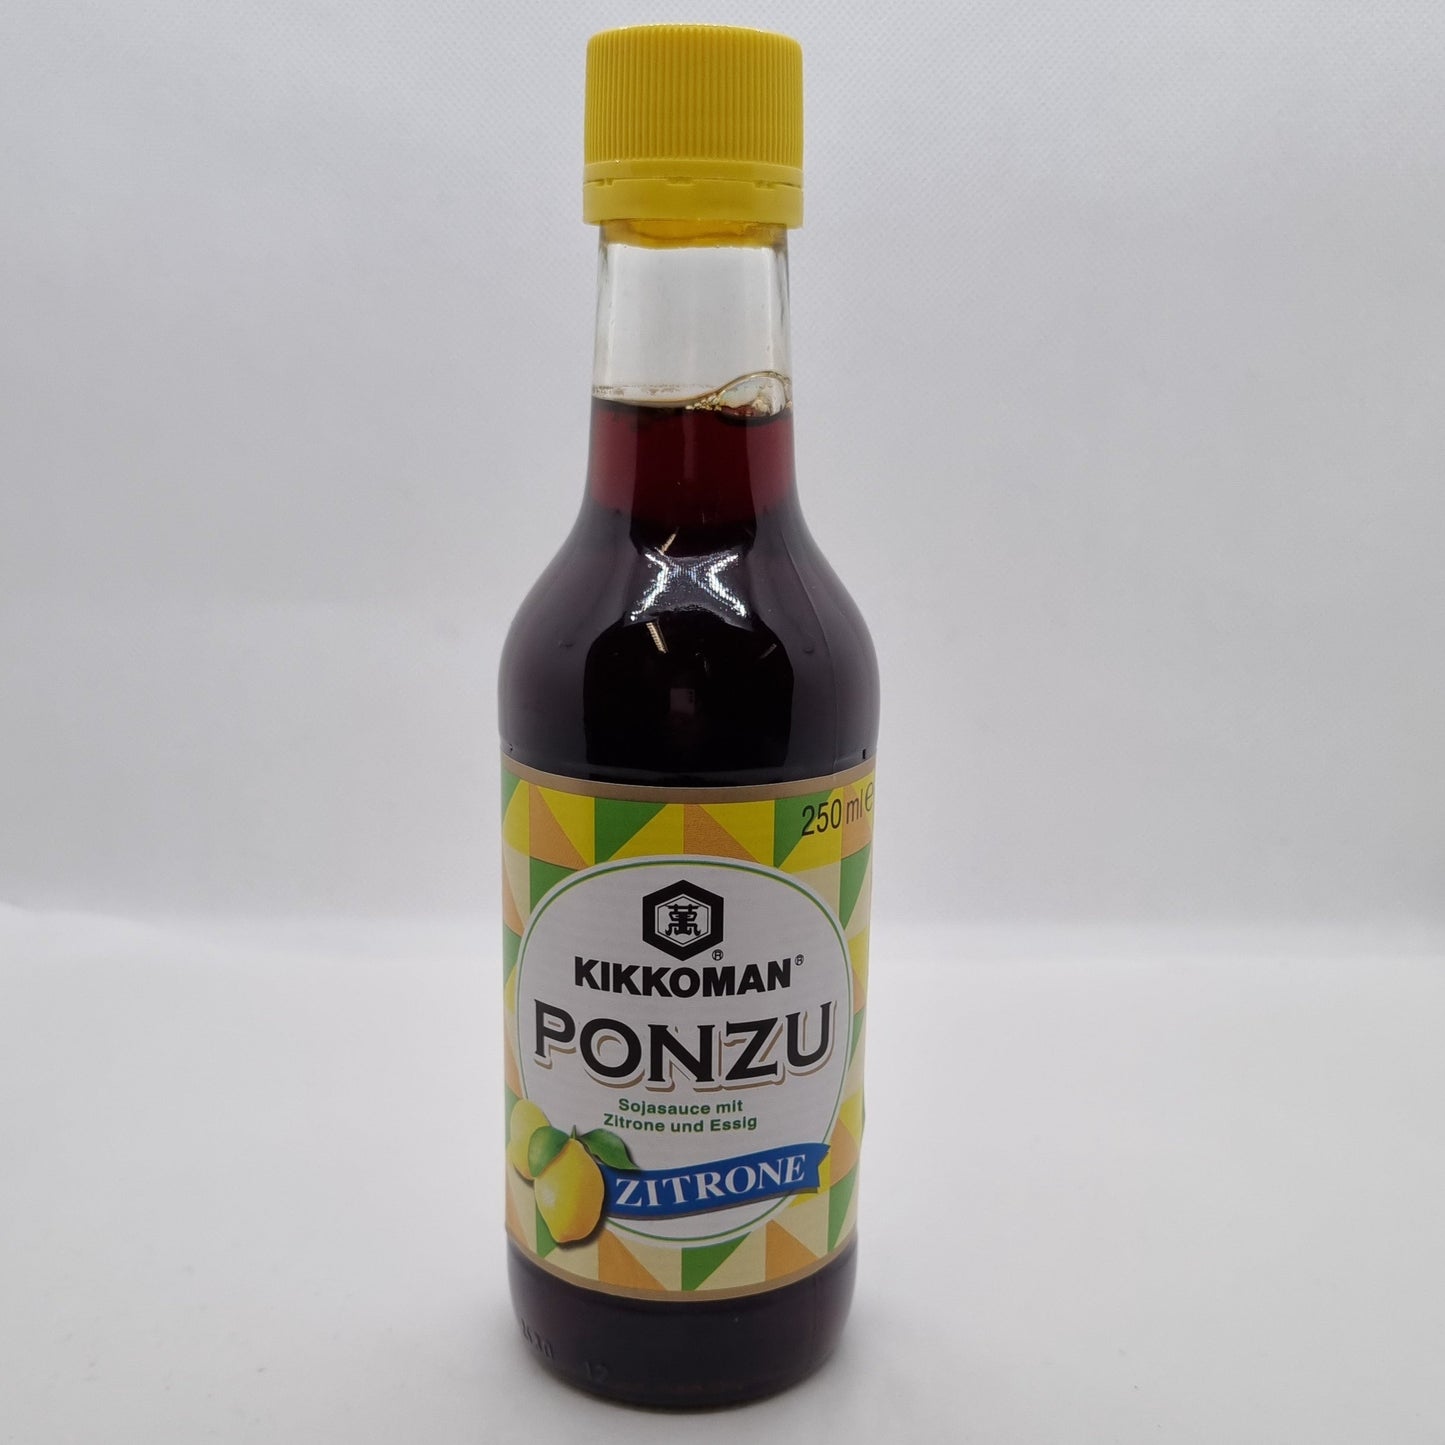 Kikkoman Ponzu Soysauce with Lemon and vinegar 250ml